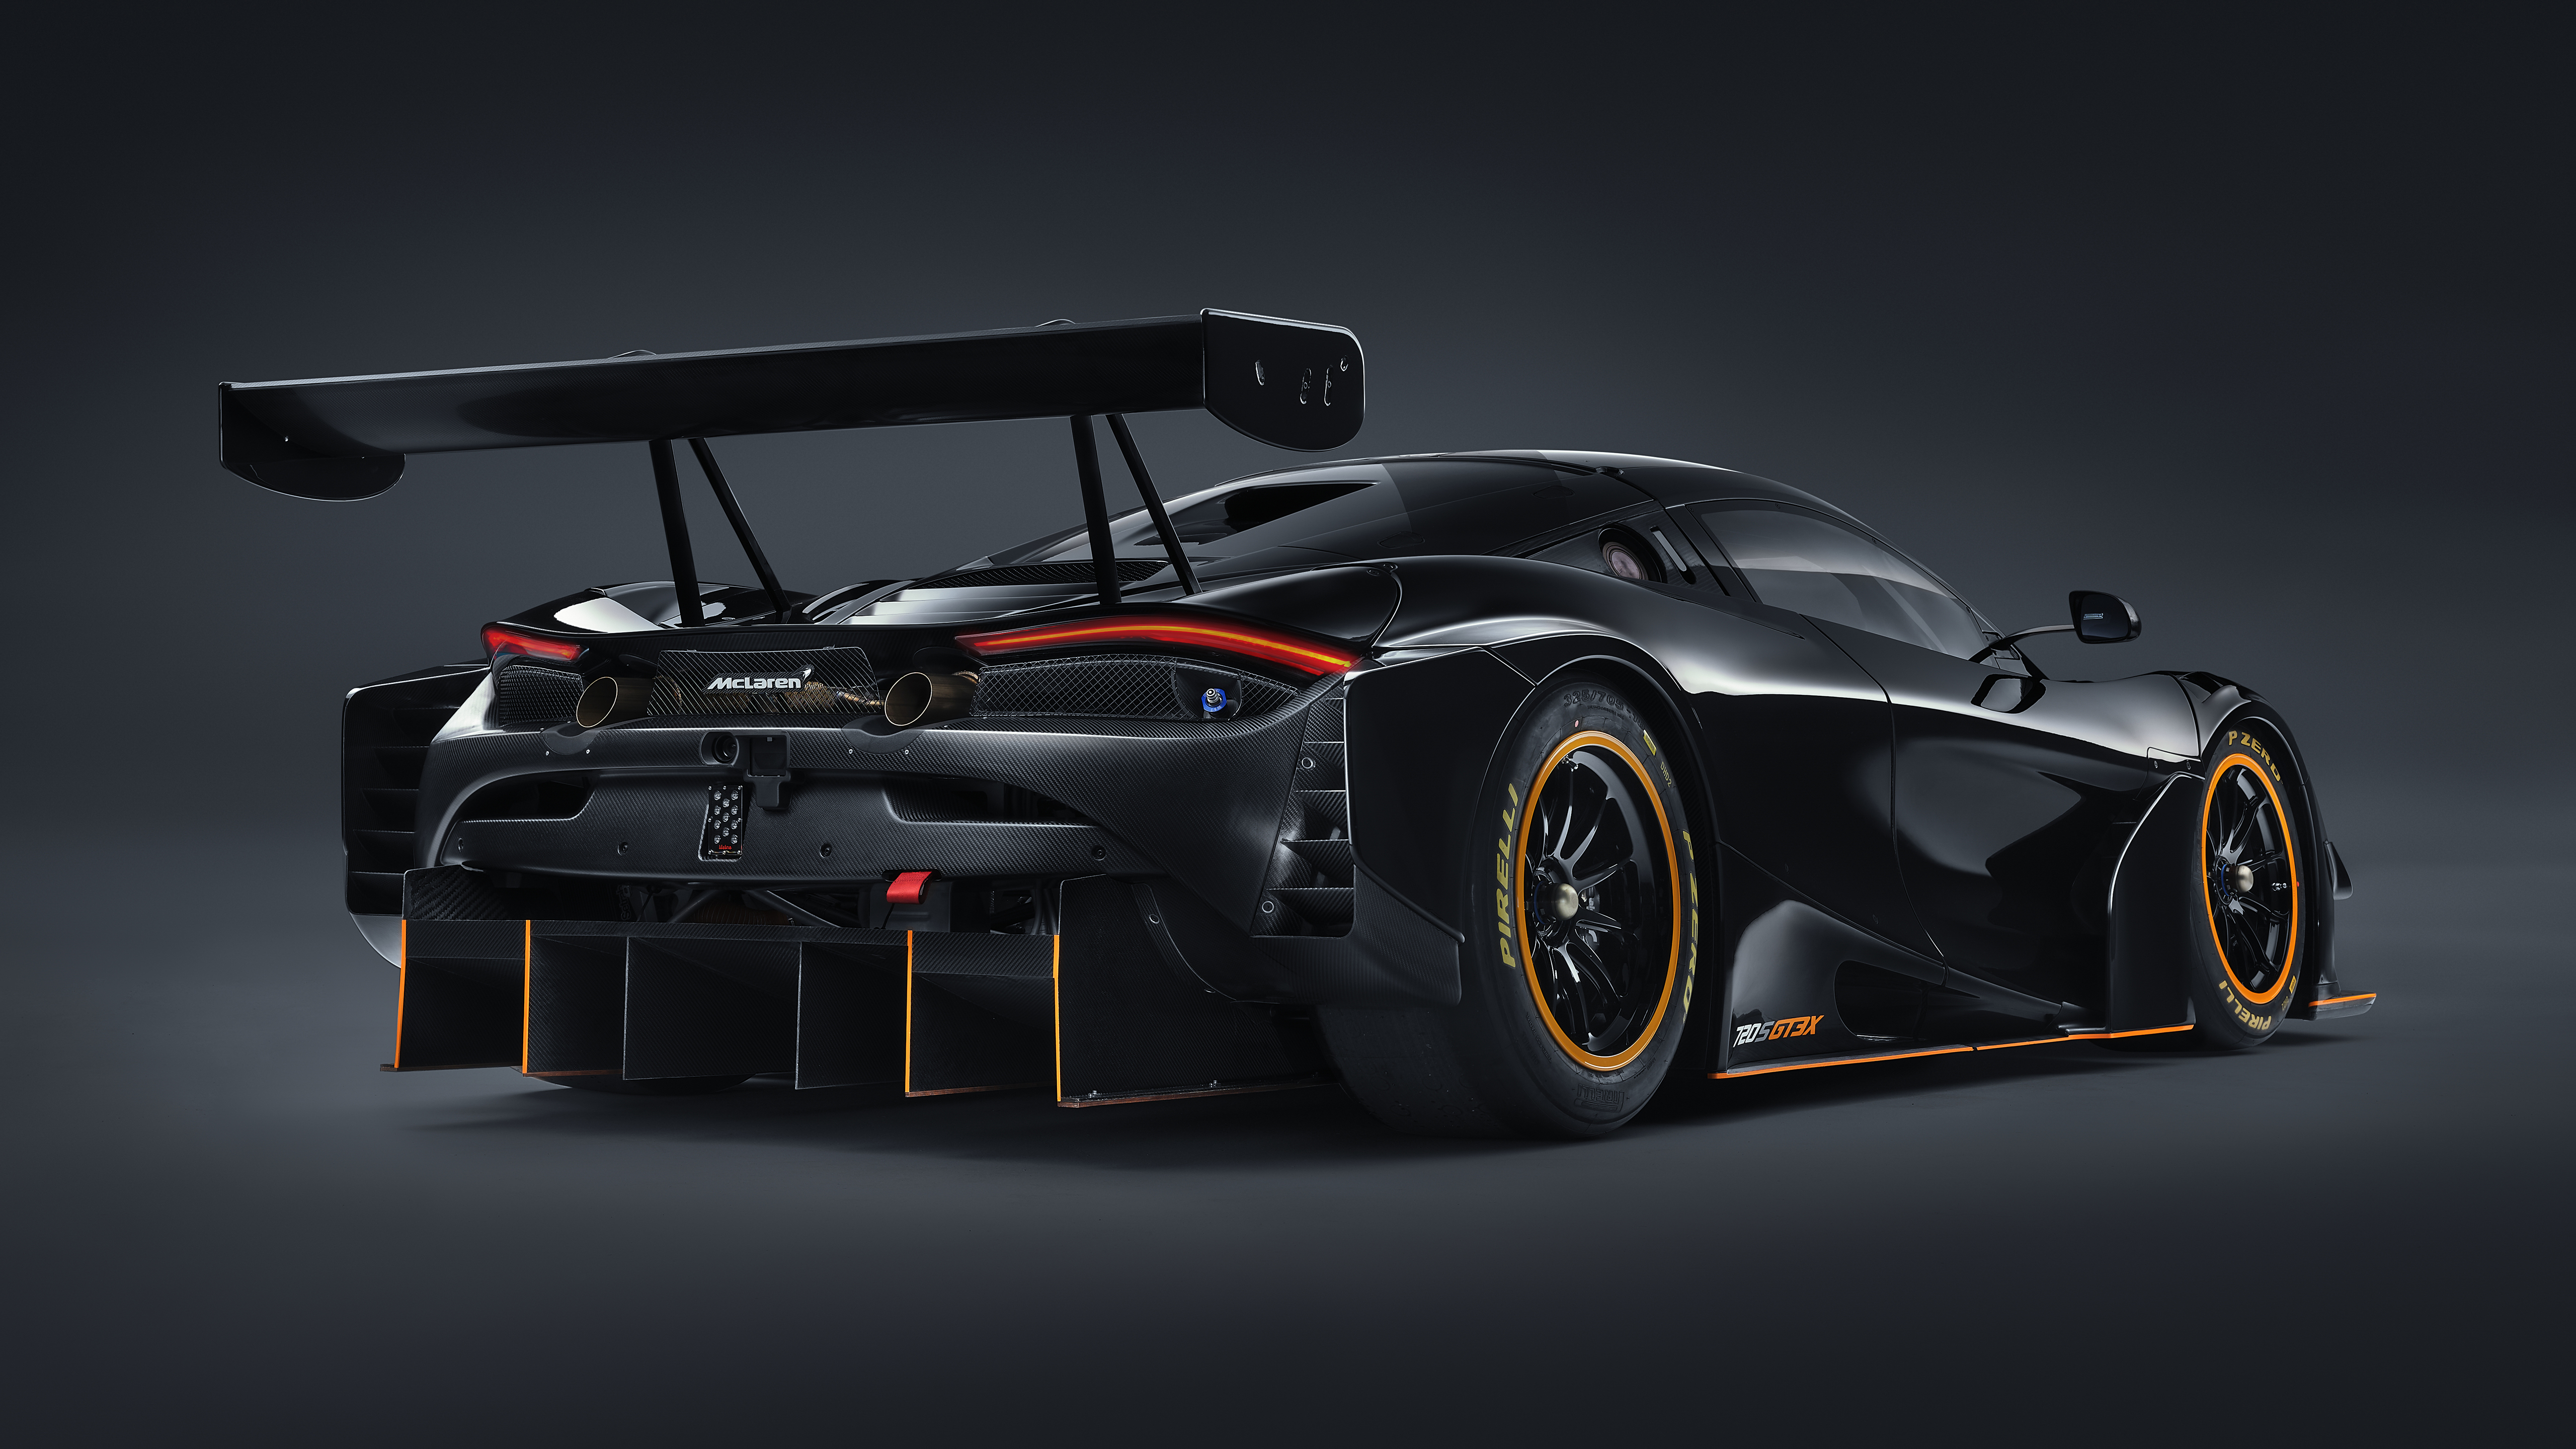 McLaren 720S McLaren Supercars Car Vehicle Black Cars Race Cars Gray Background 5120x2880